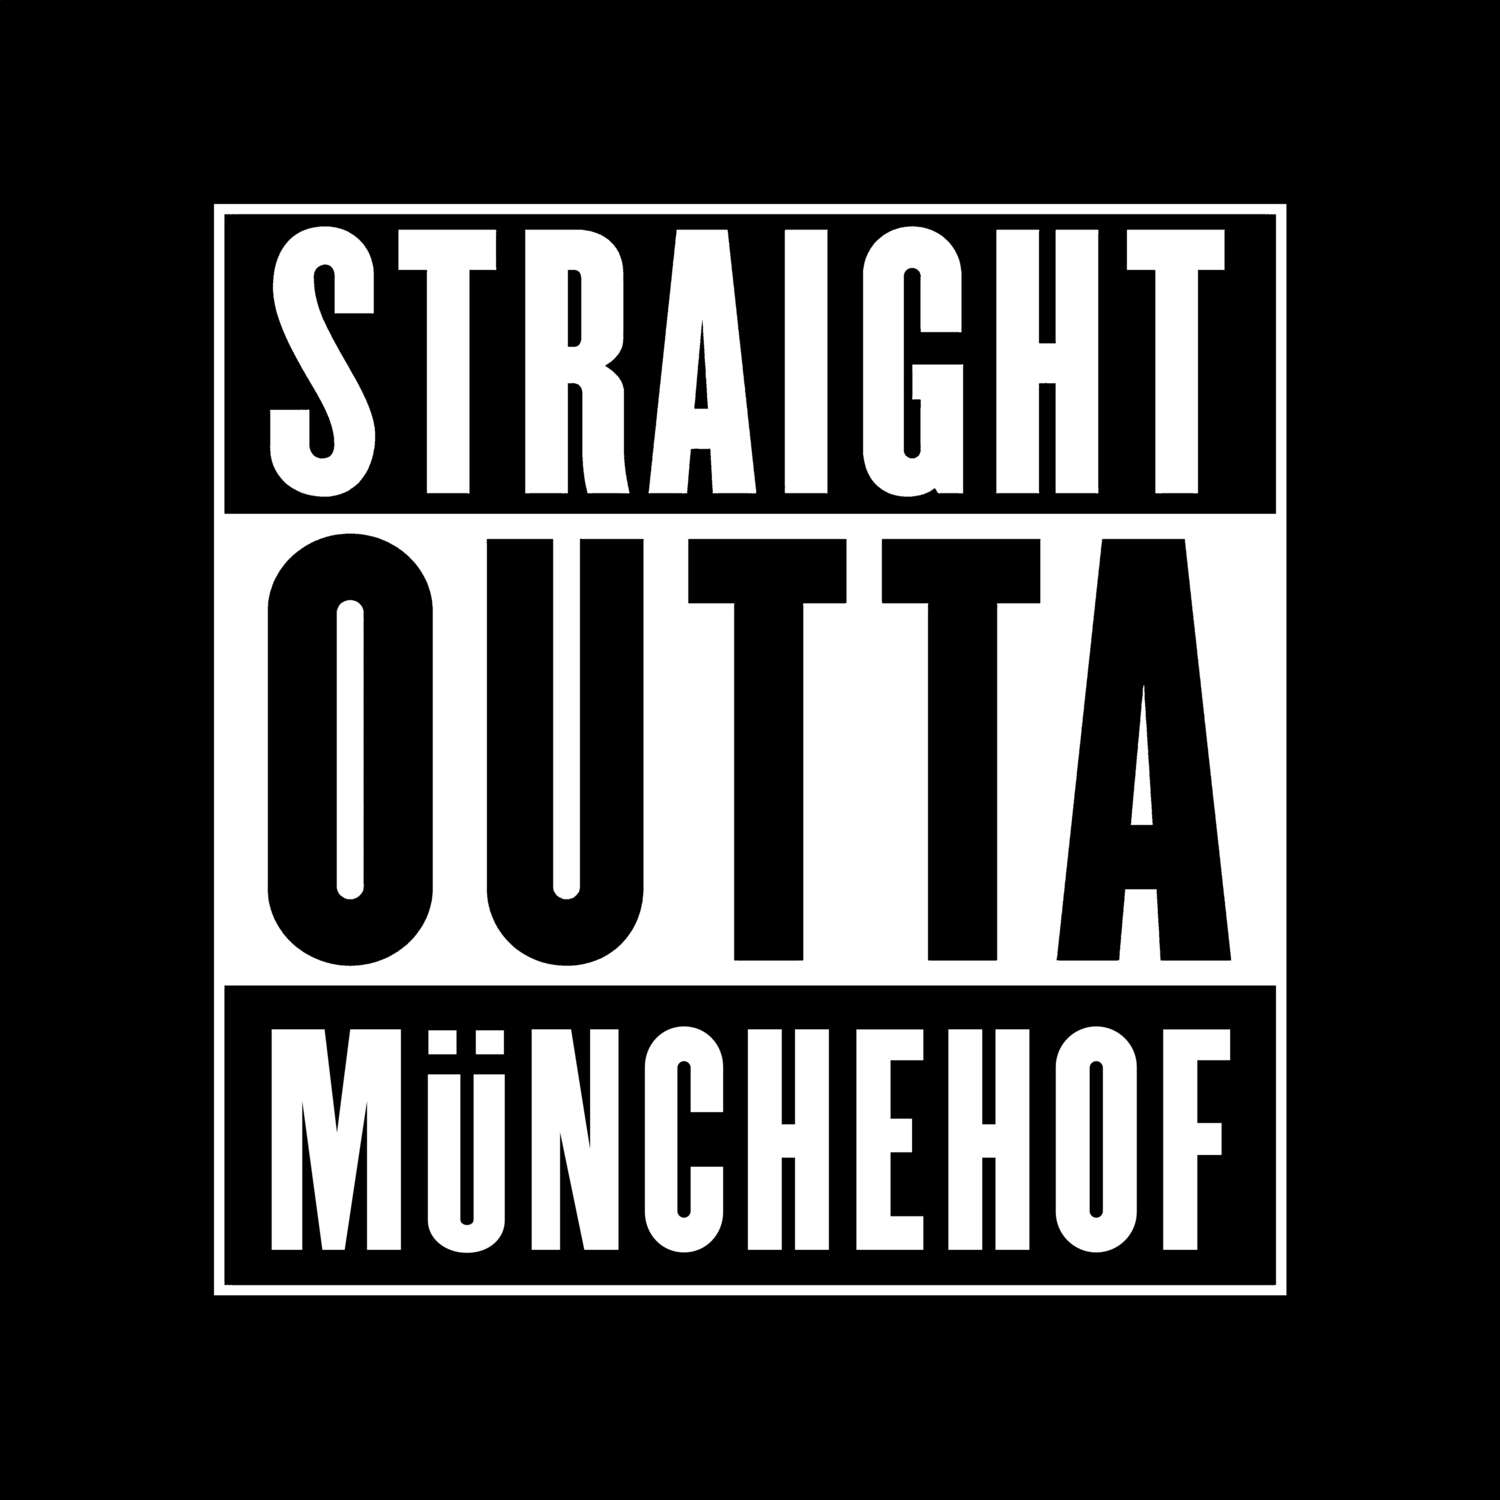 Münchehof T-Shirt »Straight Outta«